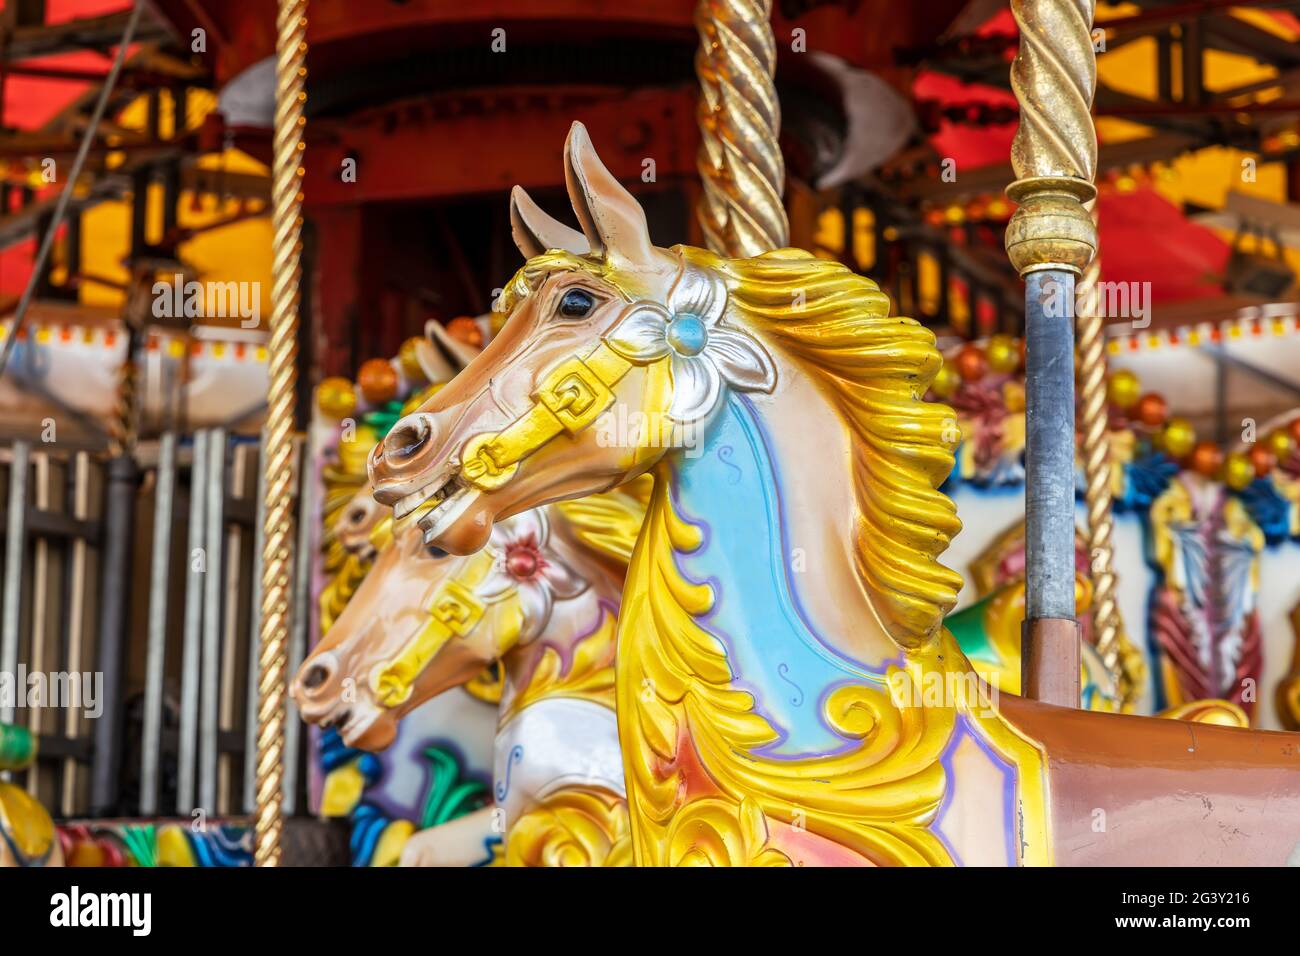 Pony carosello dipinto con colori vivaci al Funfair. Foto Stock